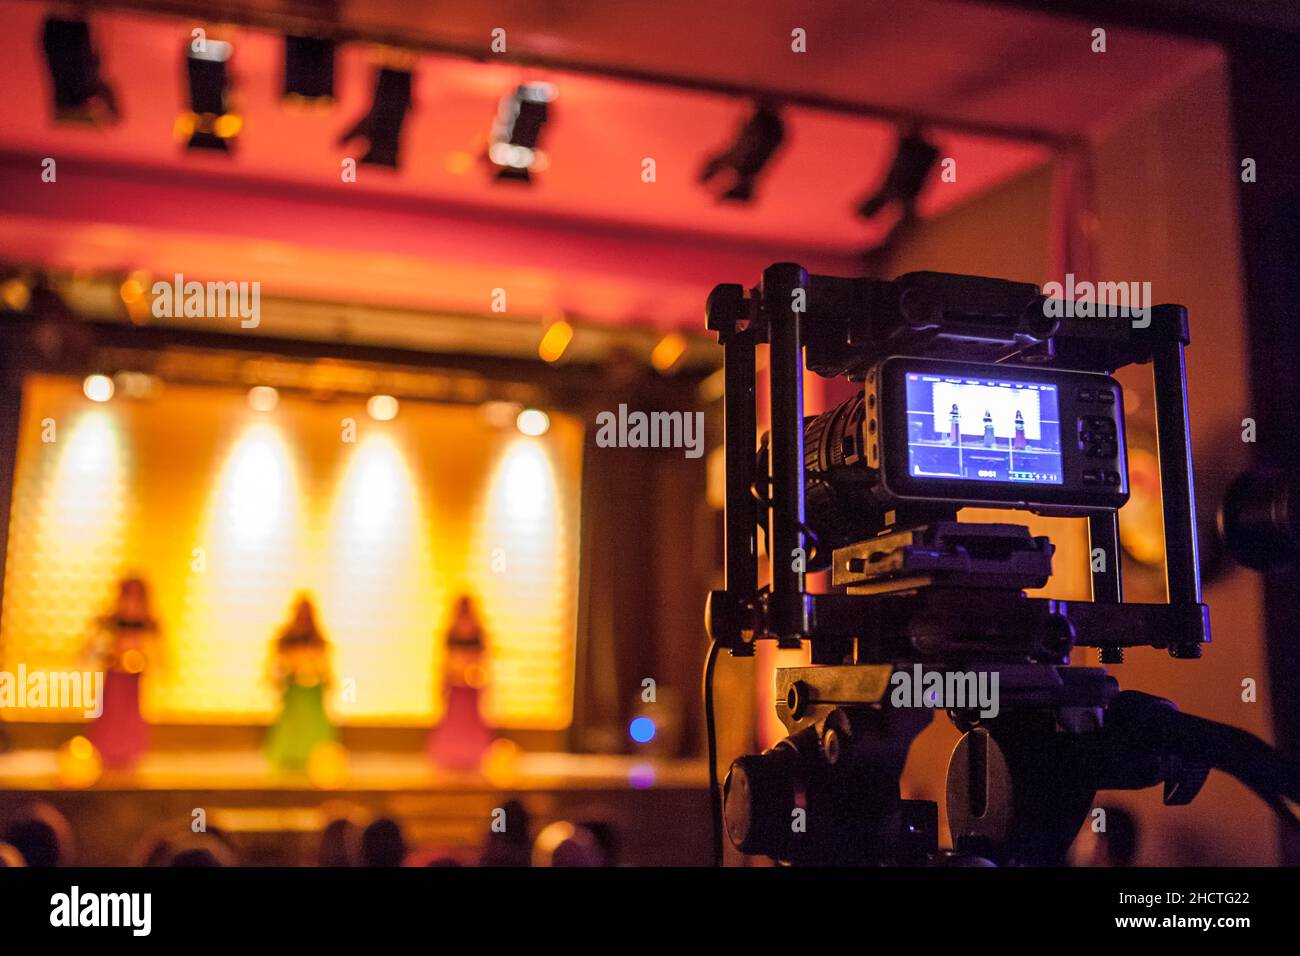 Digital video camera recording dance show. Warm ambience Stock Photo